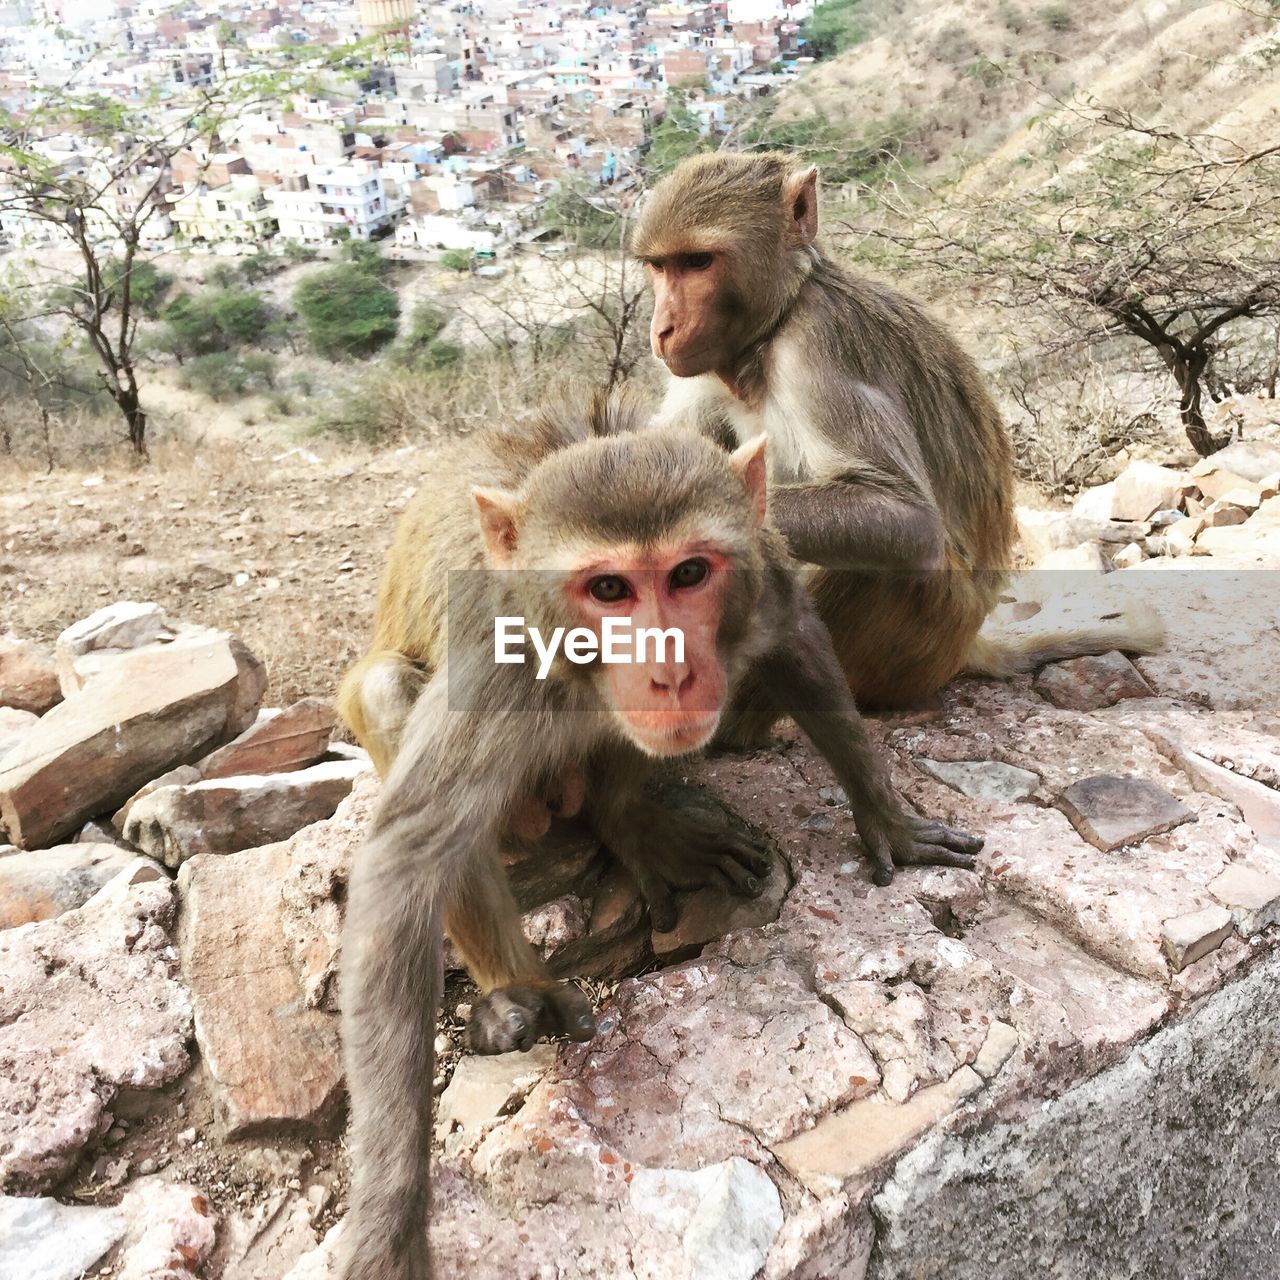 Monkeys sitting on rocks